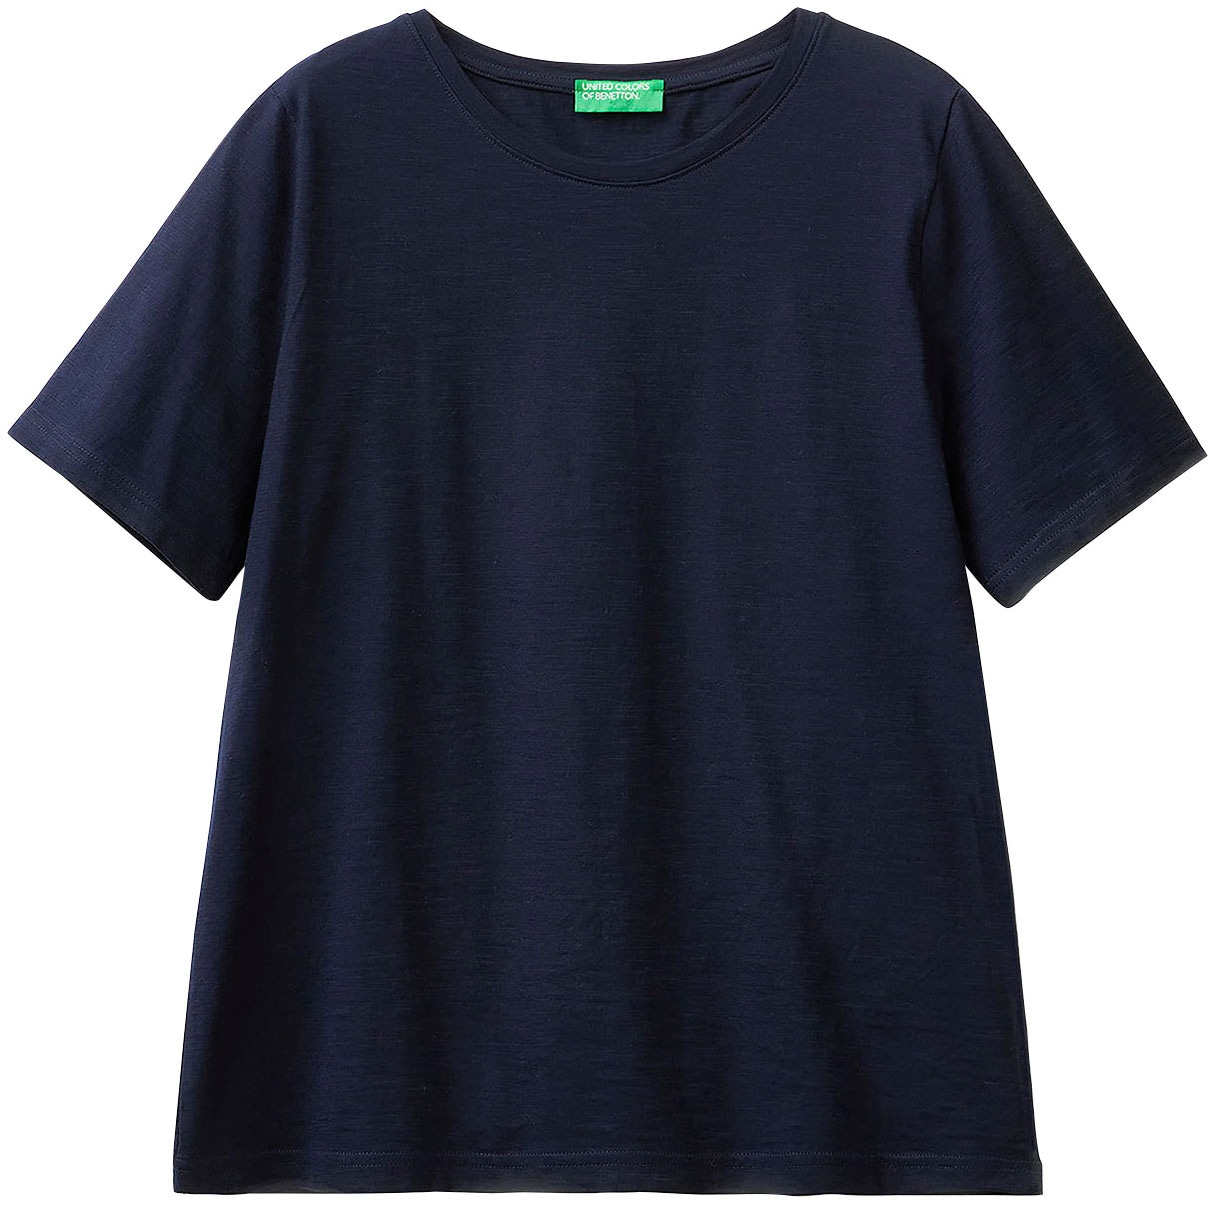 in online Basic-Optik T-Shirt, OTTO bestellen cleaner Colors United Benetton bei of